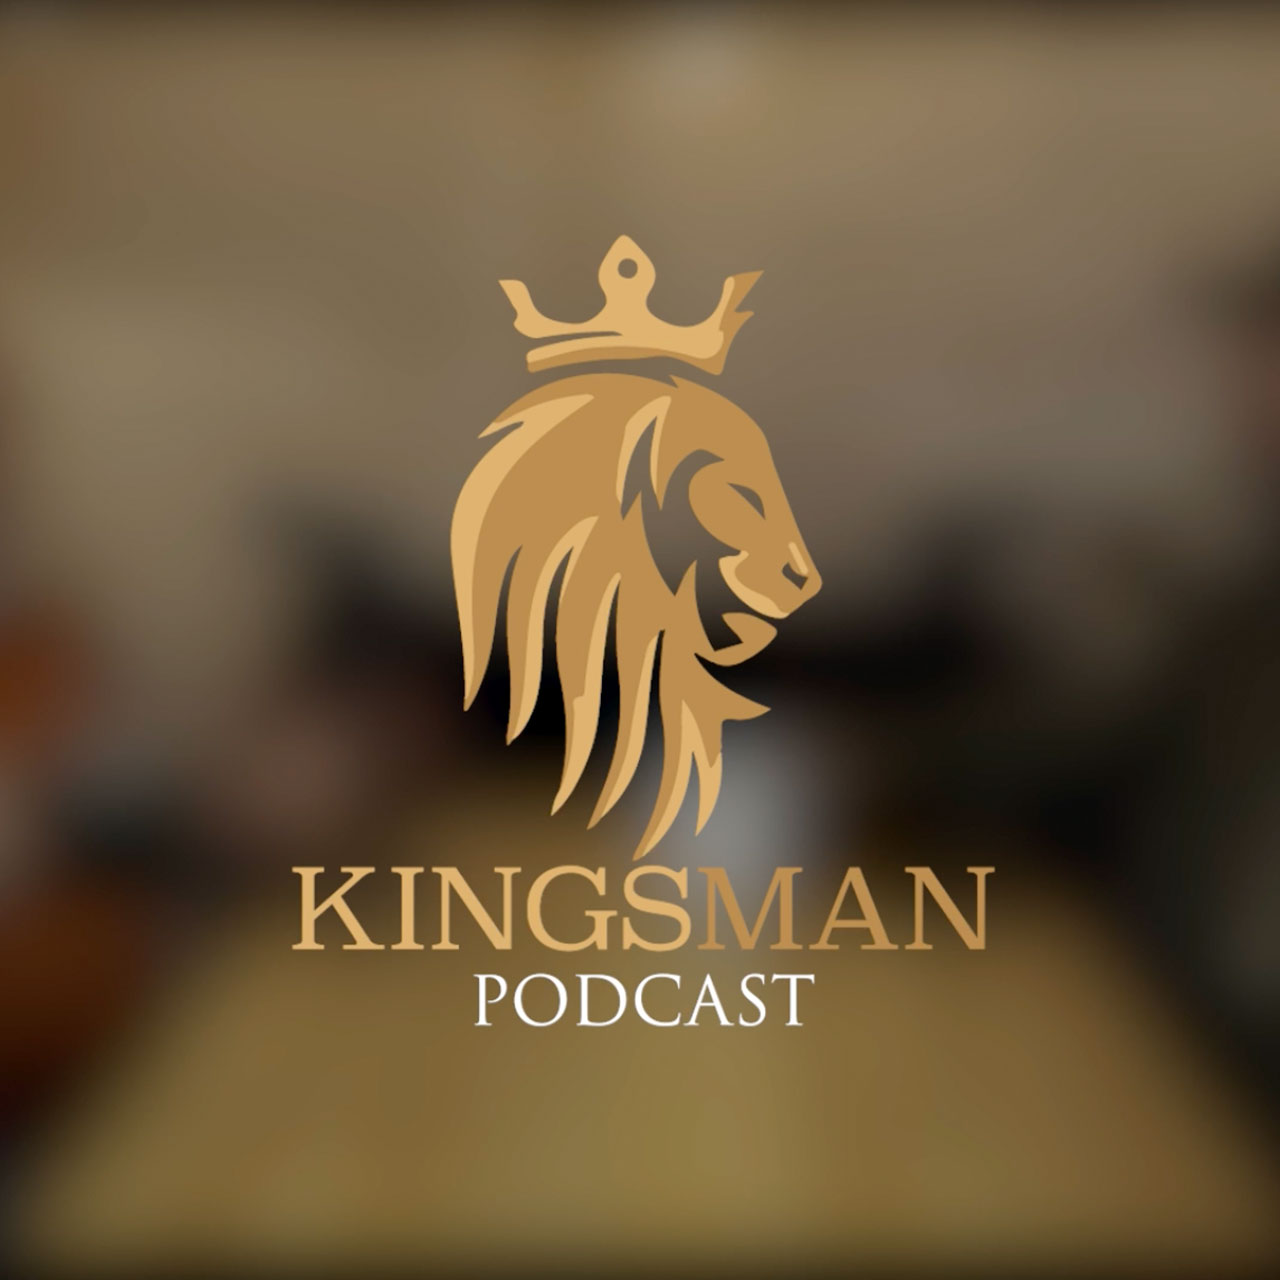 The RLM Kingsman’s Podcast